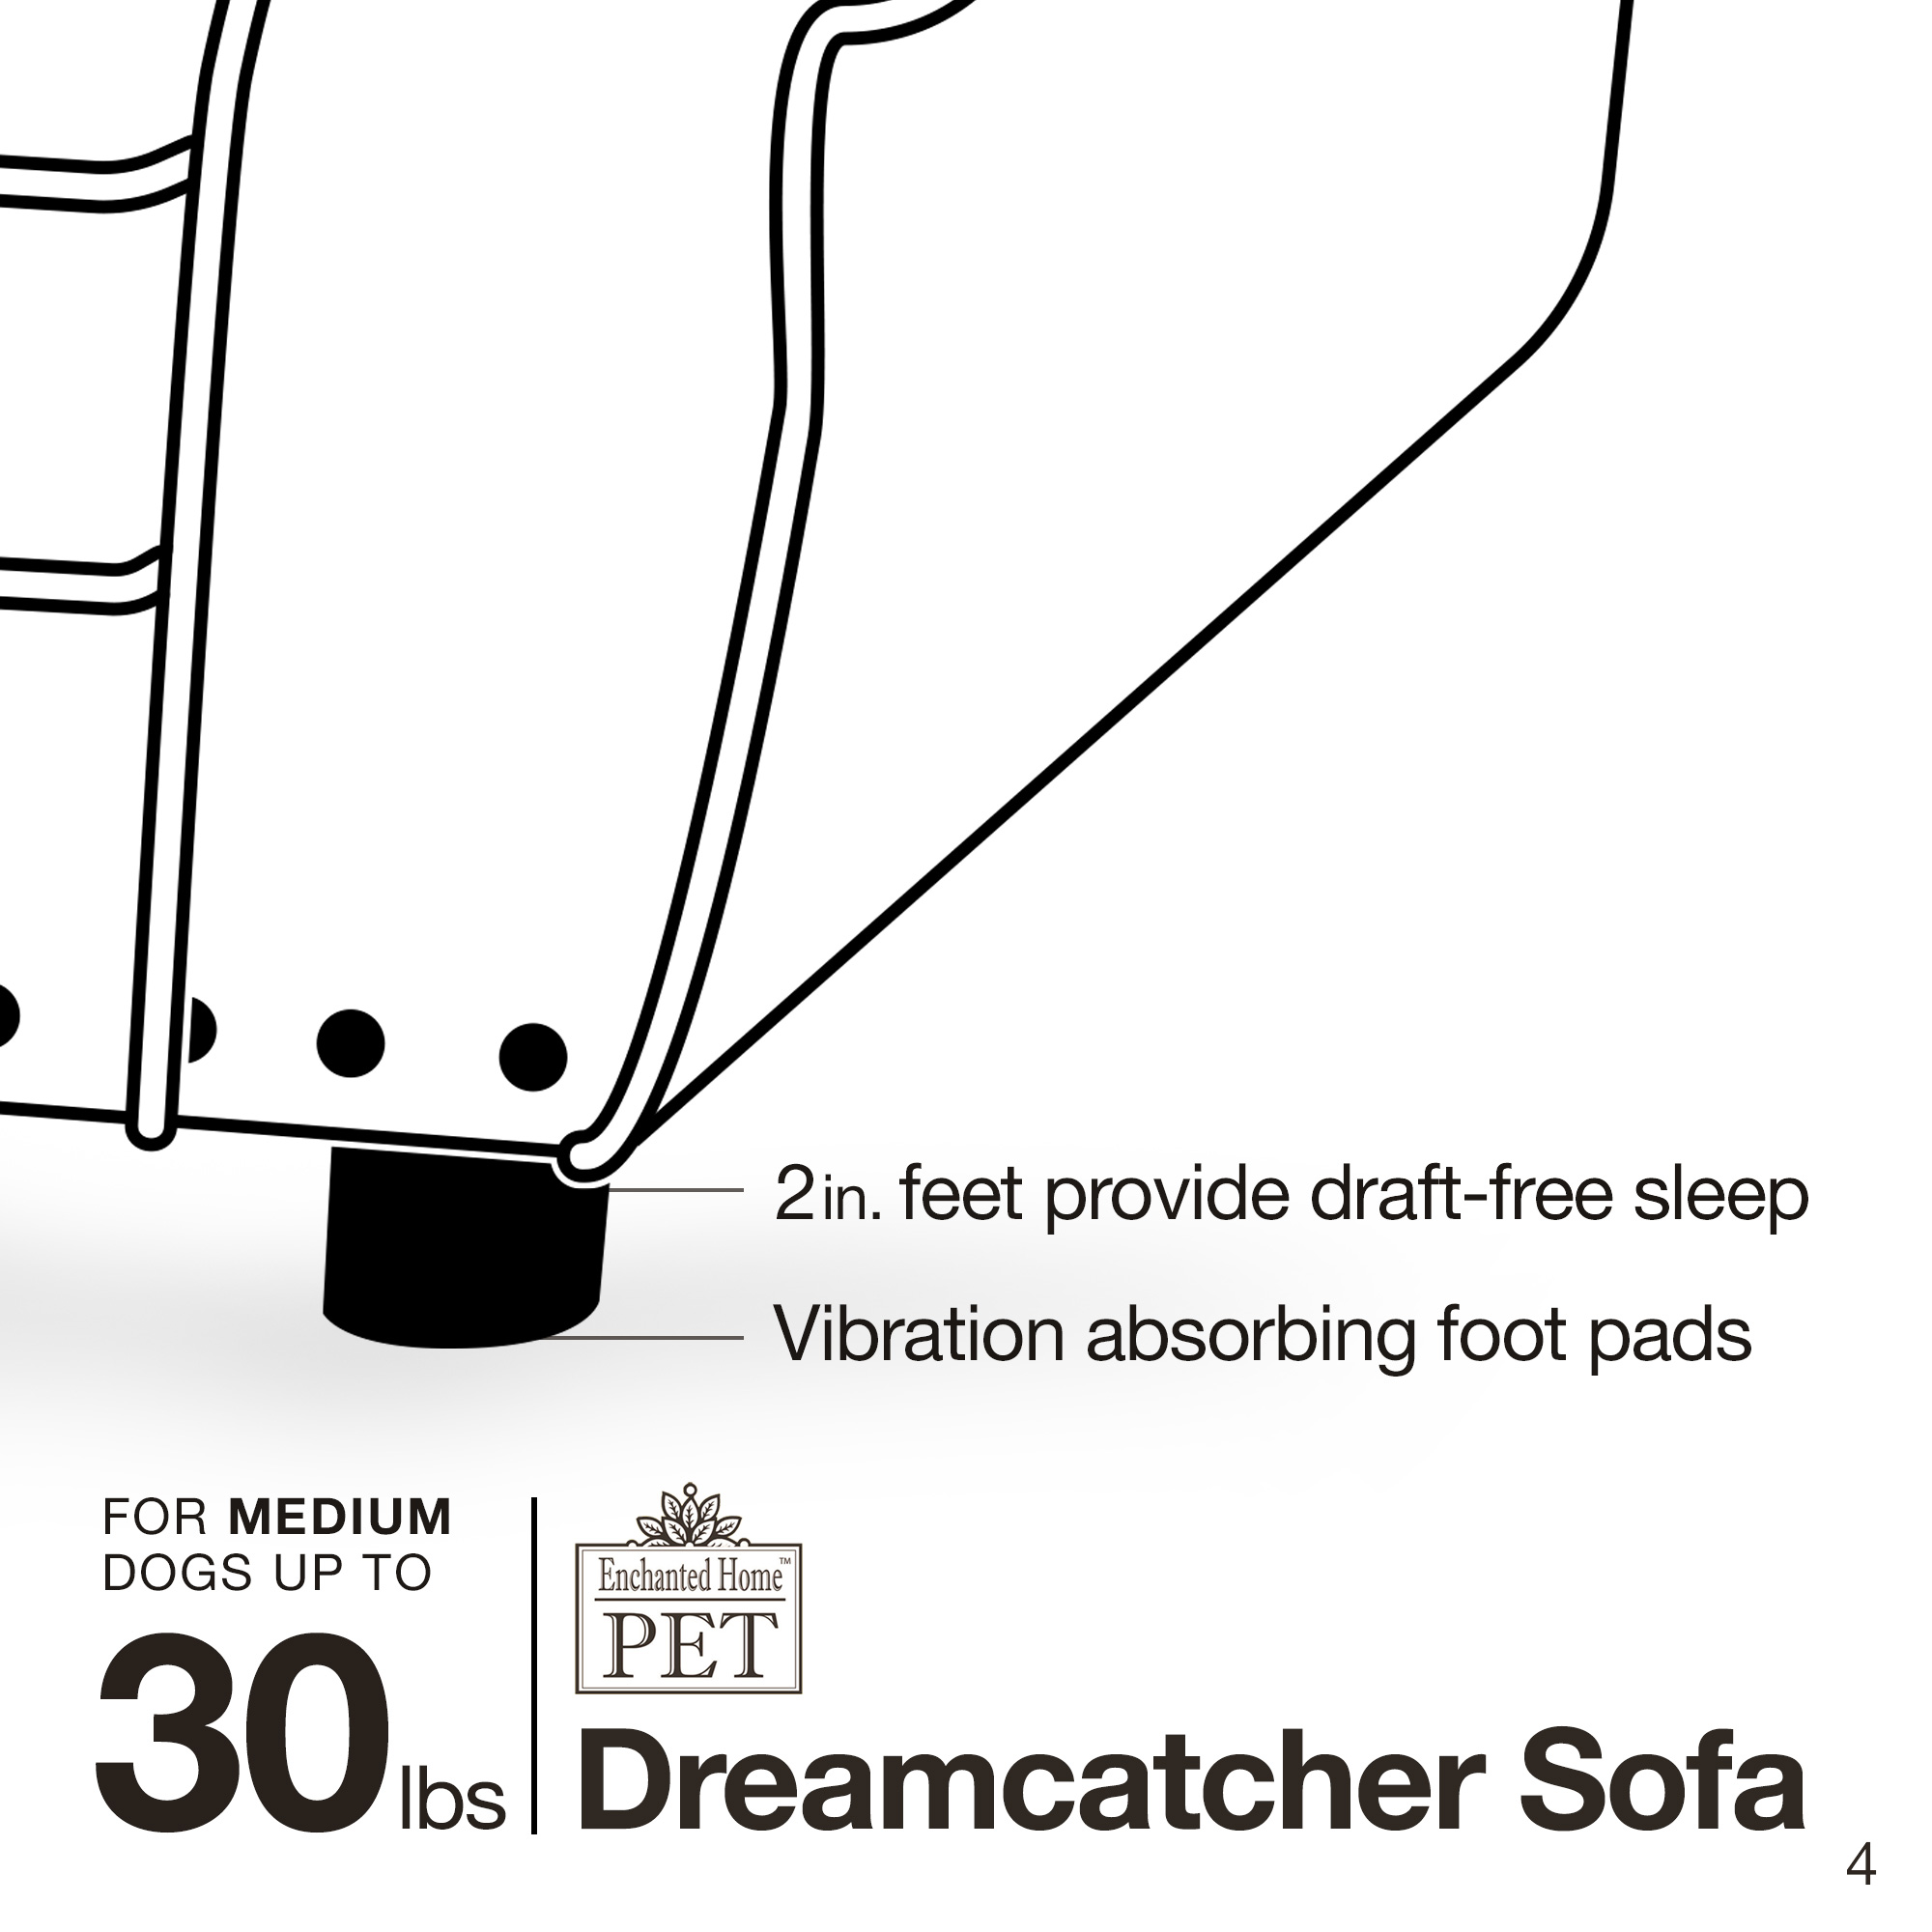 Ultra Plush Dreamcatcher Sofa